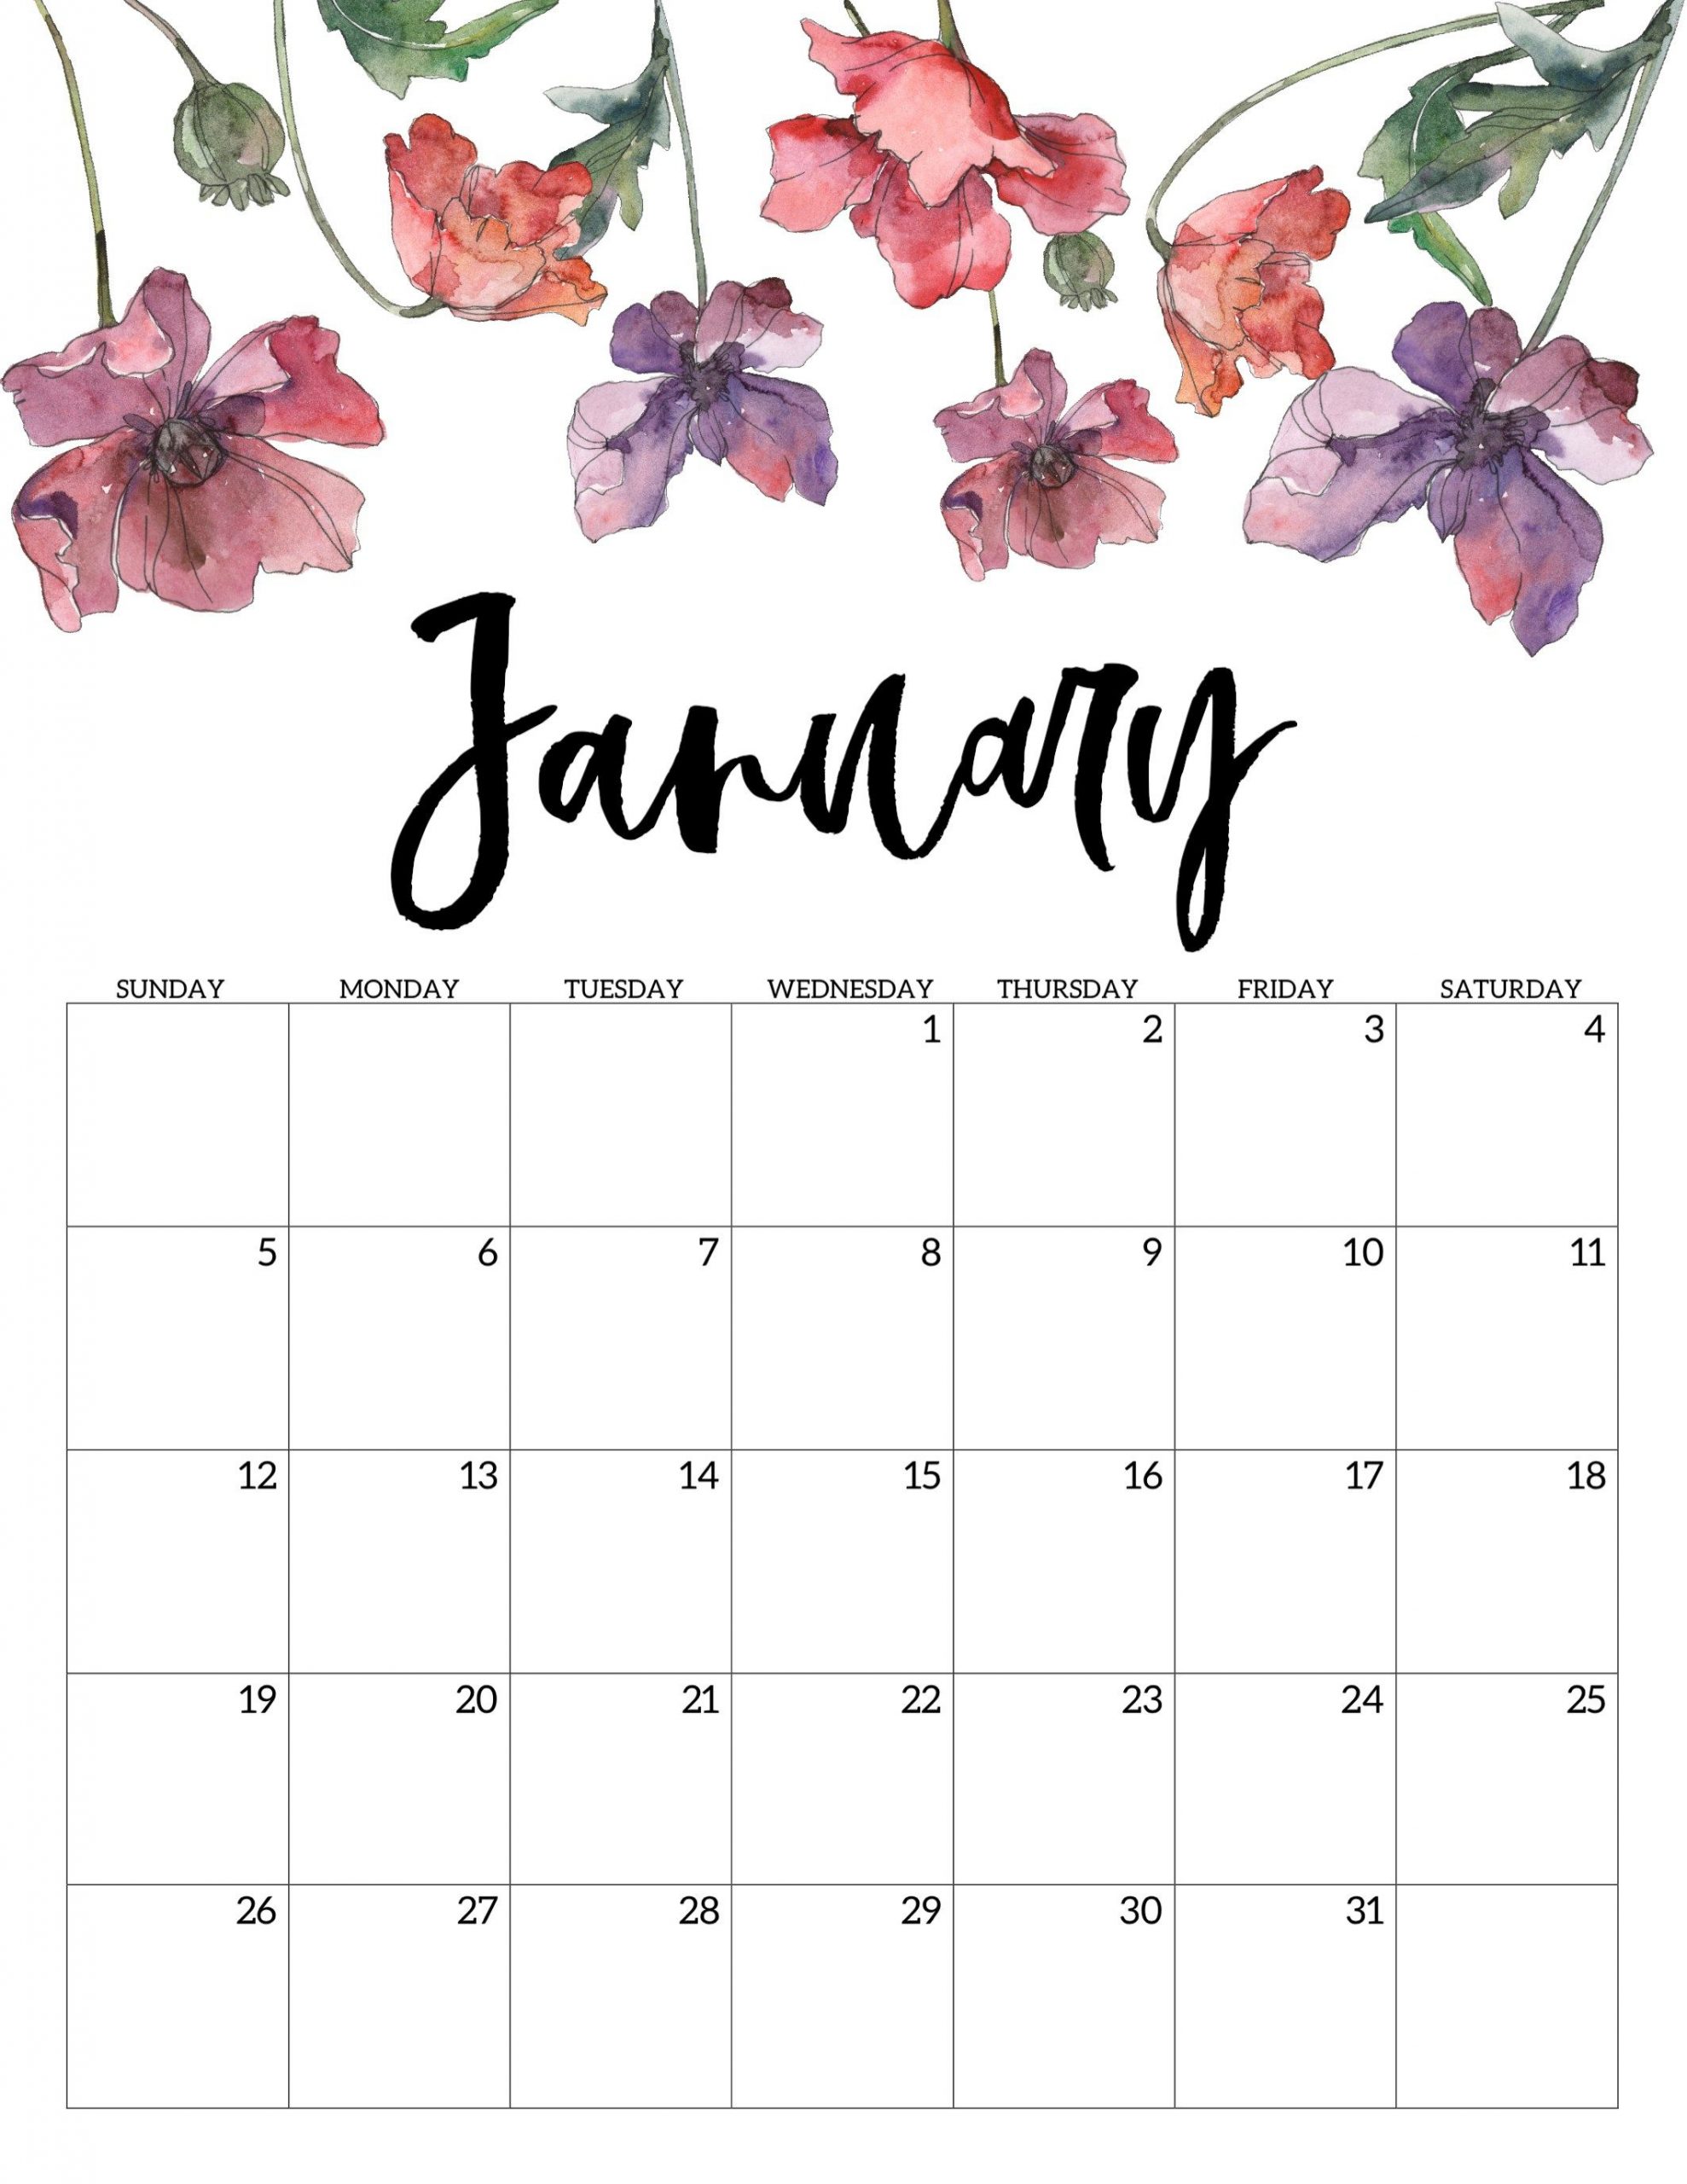 January 2020 Floral Calendar | Print Calendar, Free